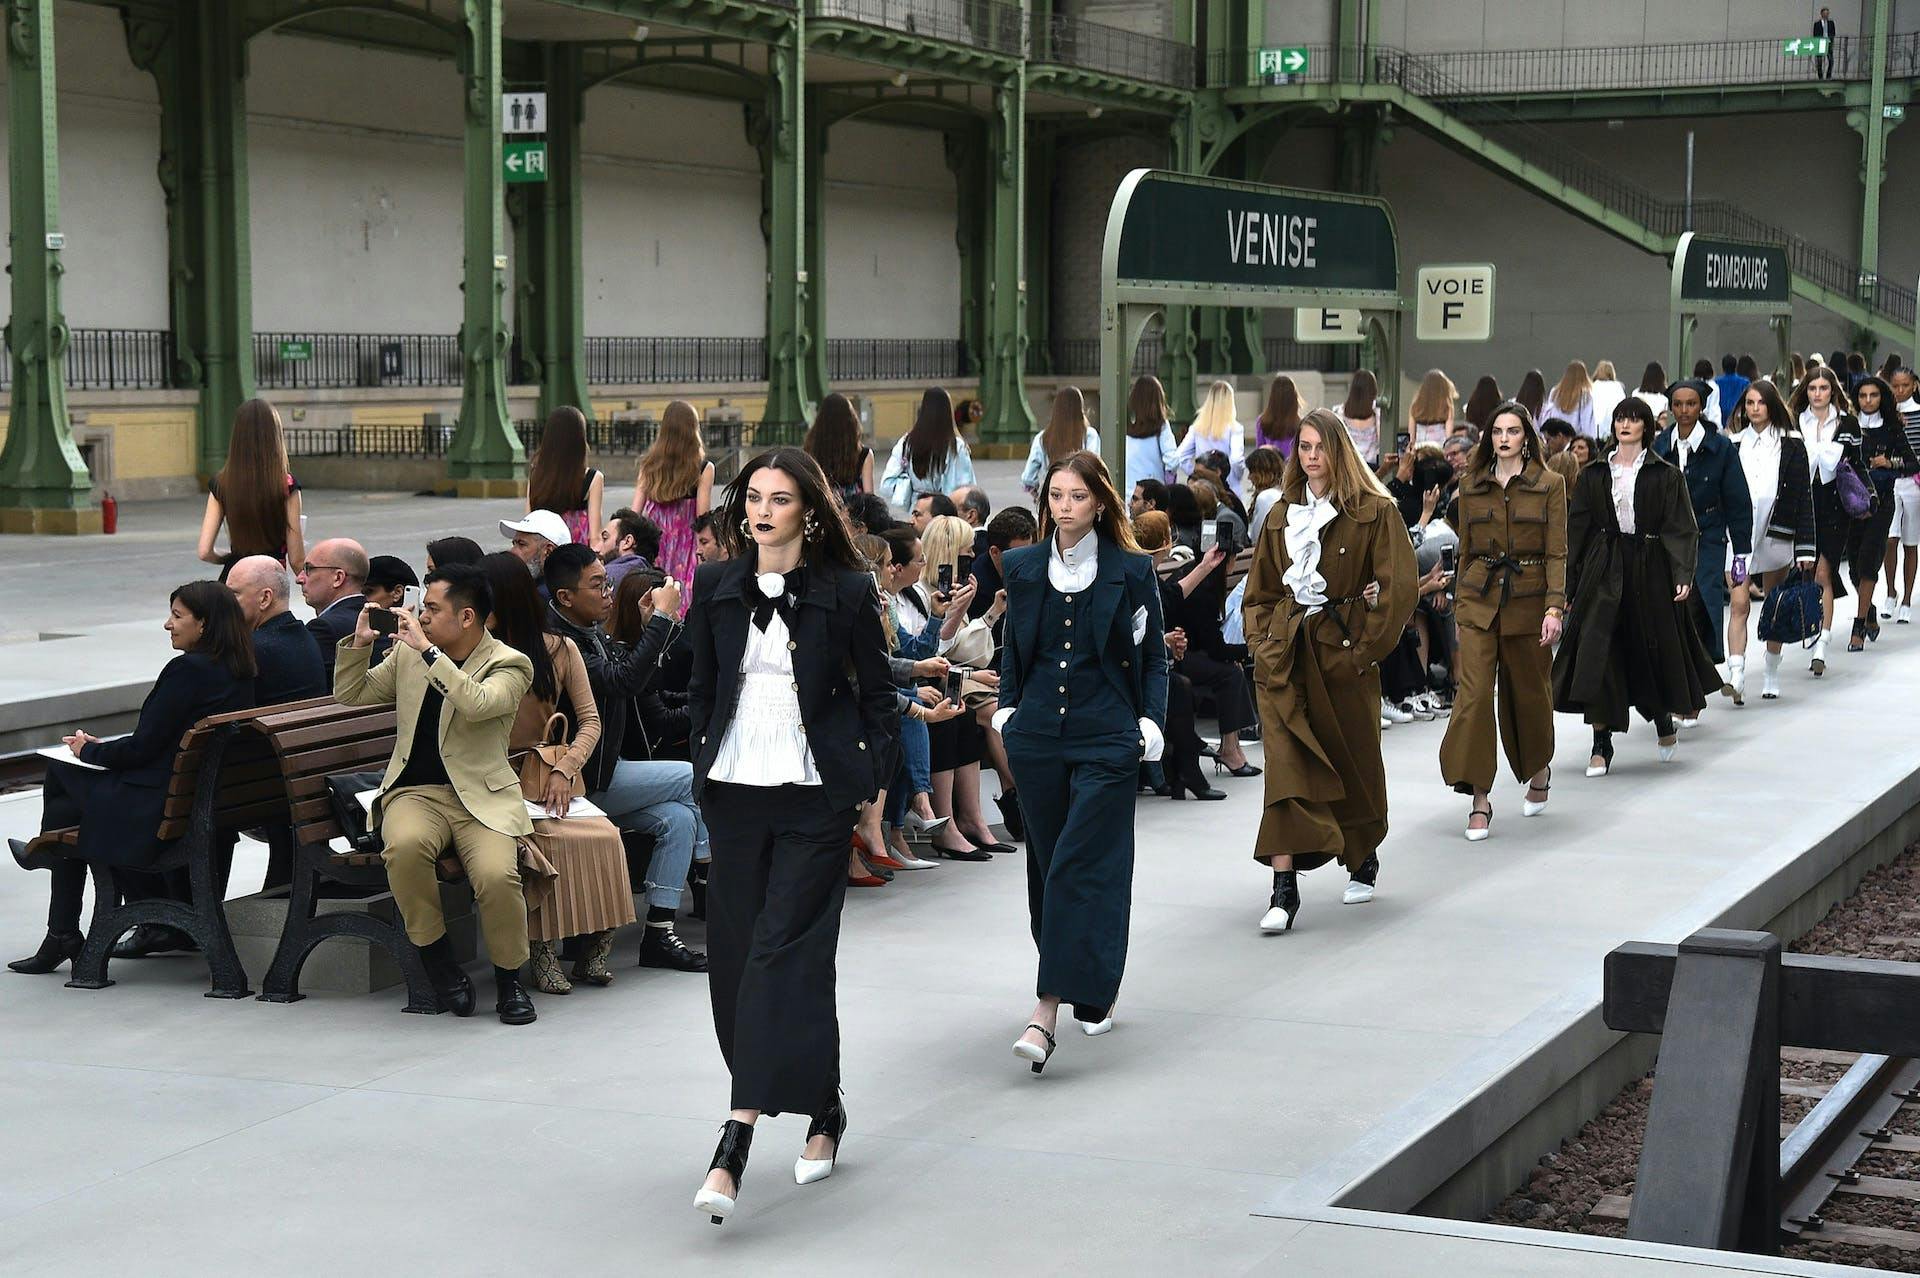 bestof,topix paris person human clothing apparel pedestrian crowd overcoat coat